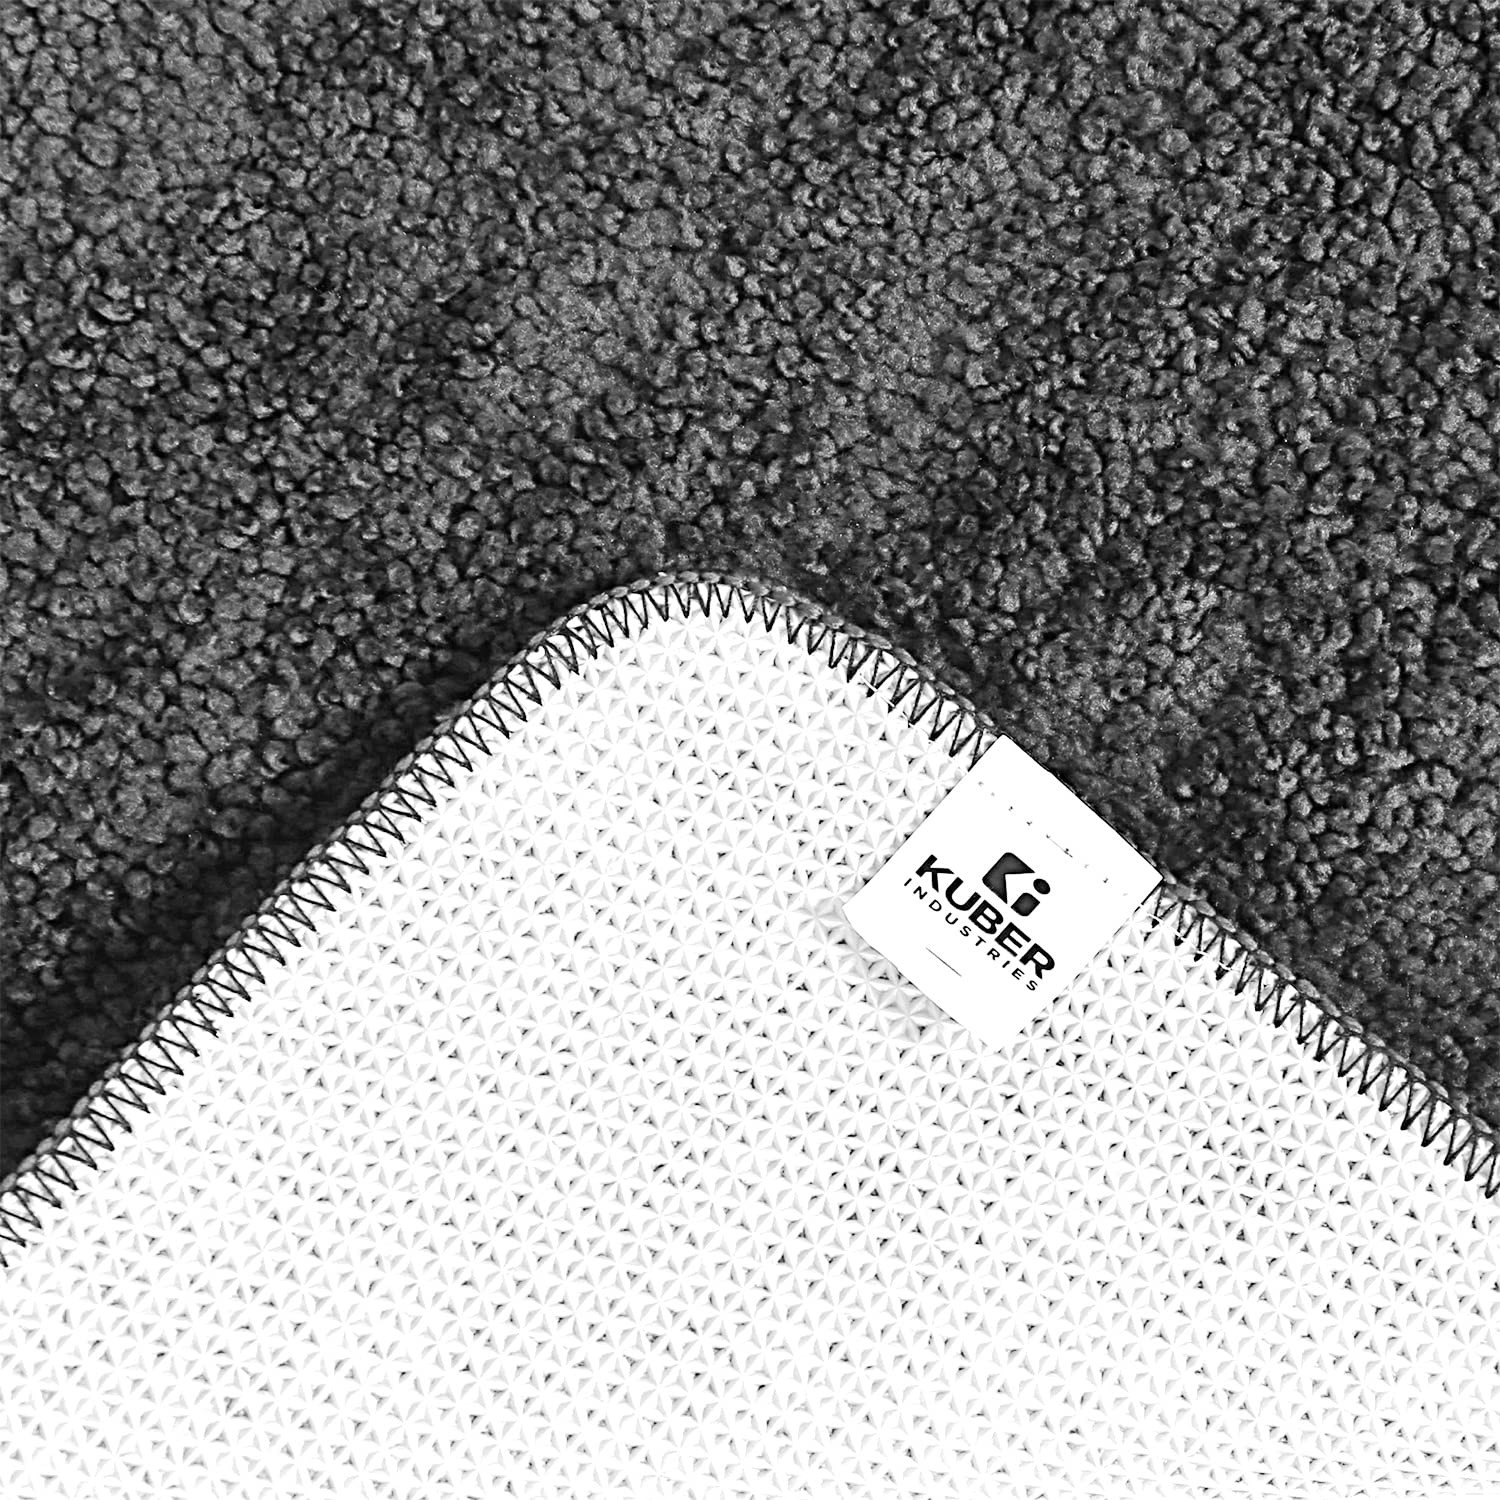 Kuber Industries Microfiber Doormats|Non-Skid Water Absorbant Fluffy Floor mat|Entrance Mat for Kitchen,Bedside,Door,Living,Prayer Room,60x40 cm,Pack of 2 (Black & Gray)